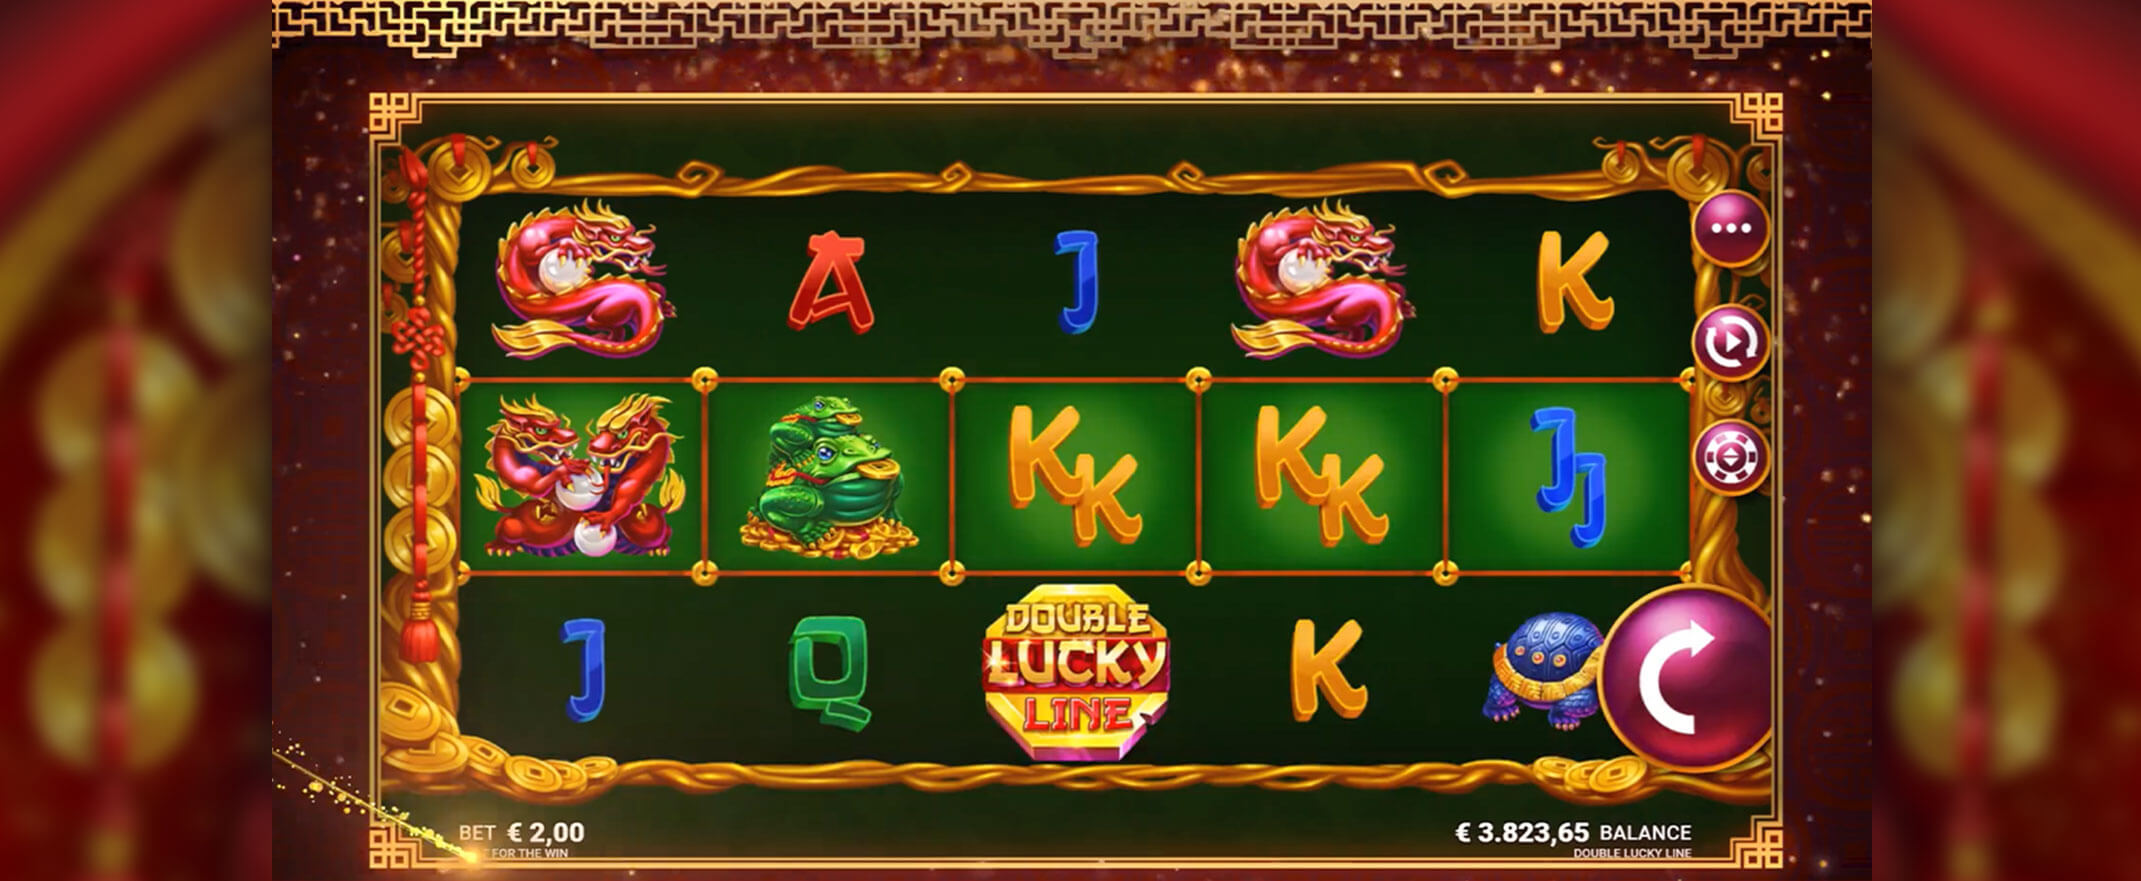 Double Lucky Line Spielautomat spielen